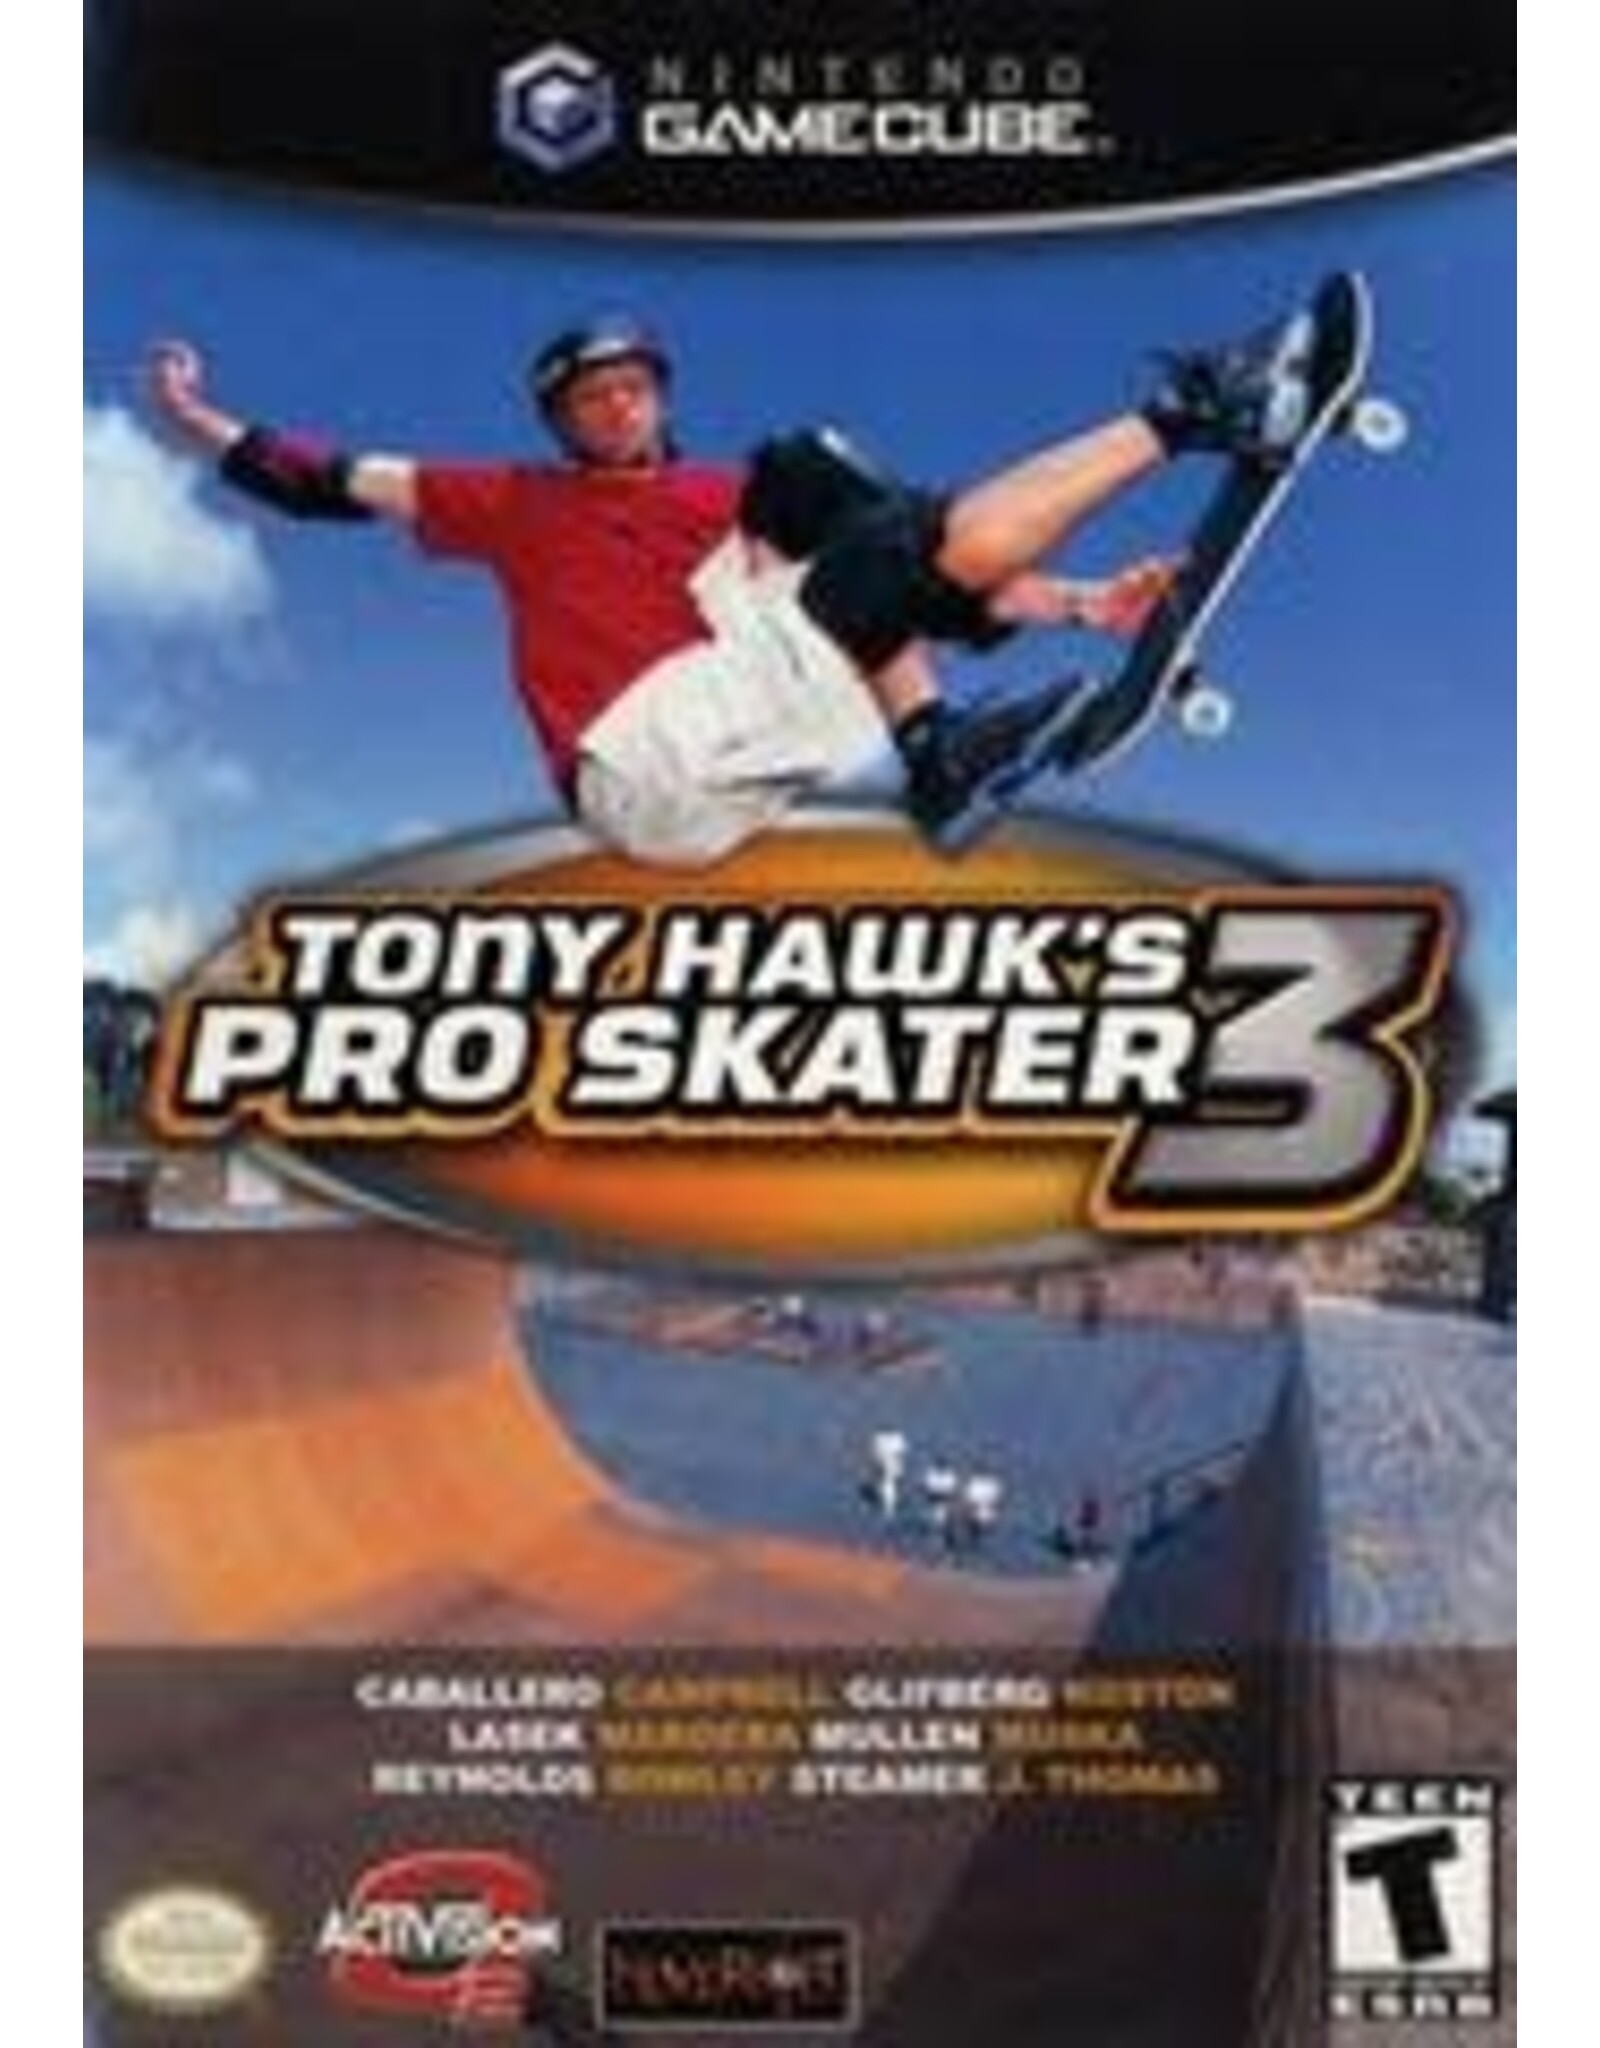 Gamecube Tony Hawk's Pro Skater 3 (No Manual, Damaged Sleeve)